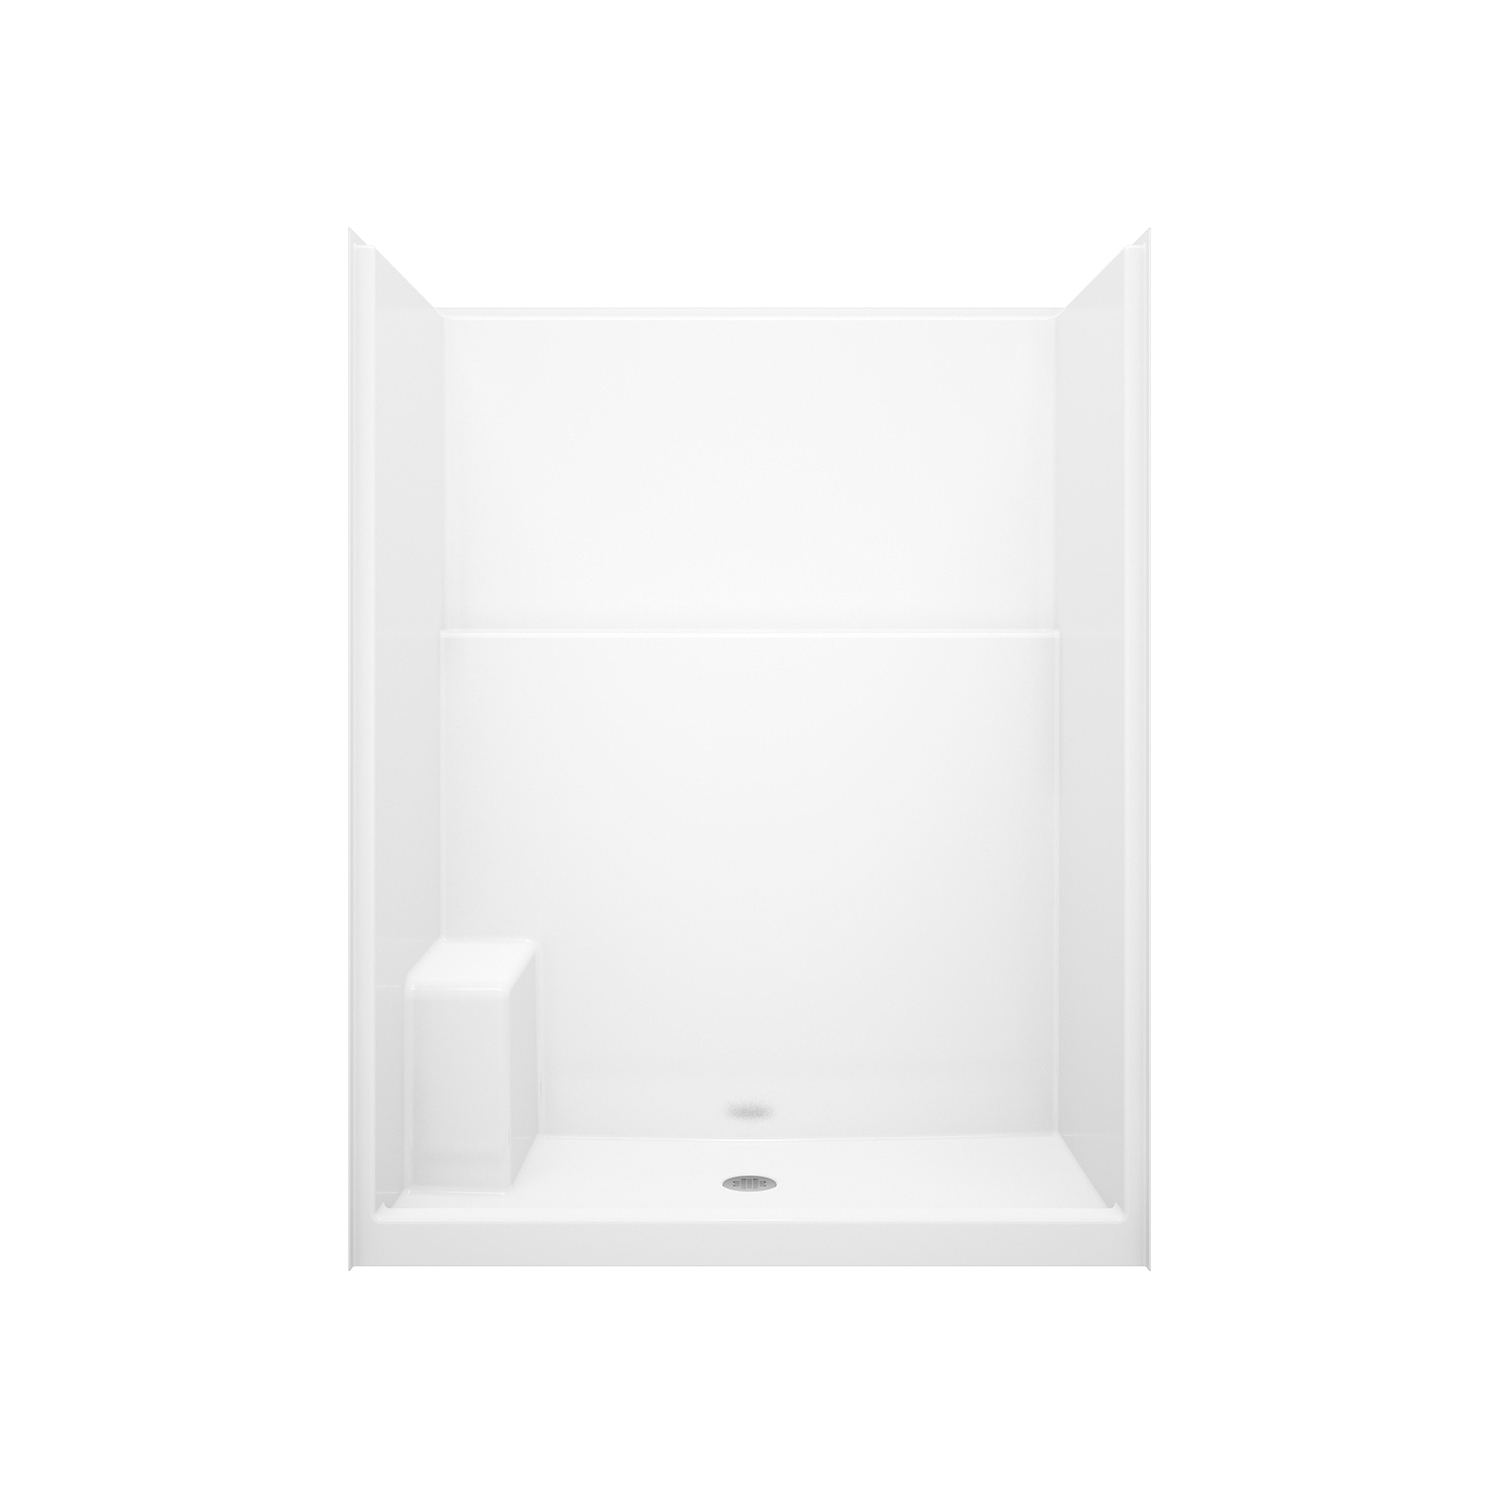 Freestyle 37 Round 37 x 37 Acrylic Corner Center Drain Two-Piece Shower in  White